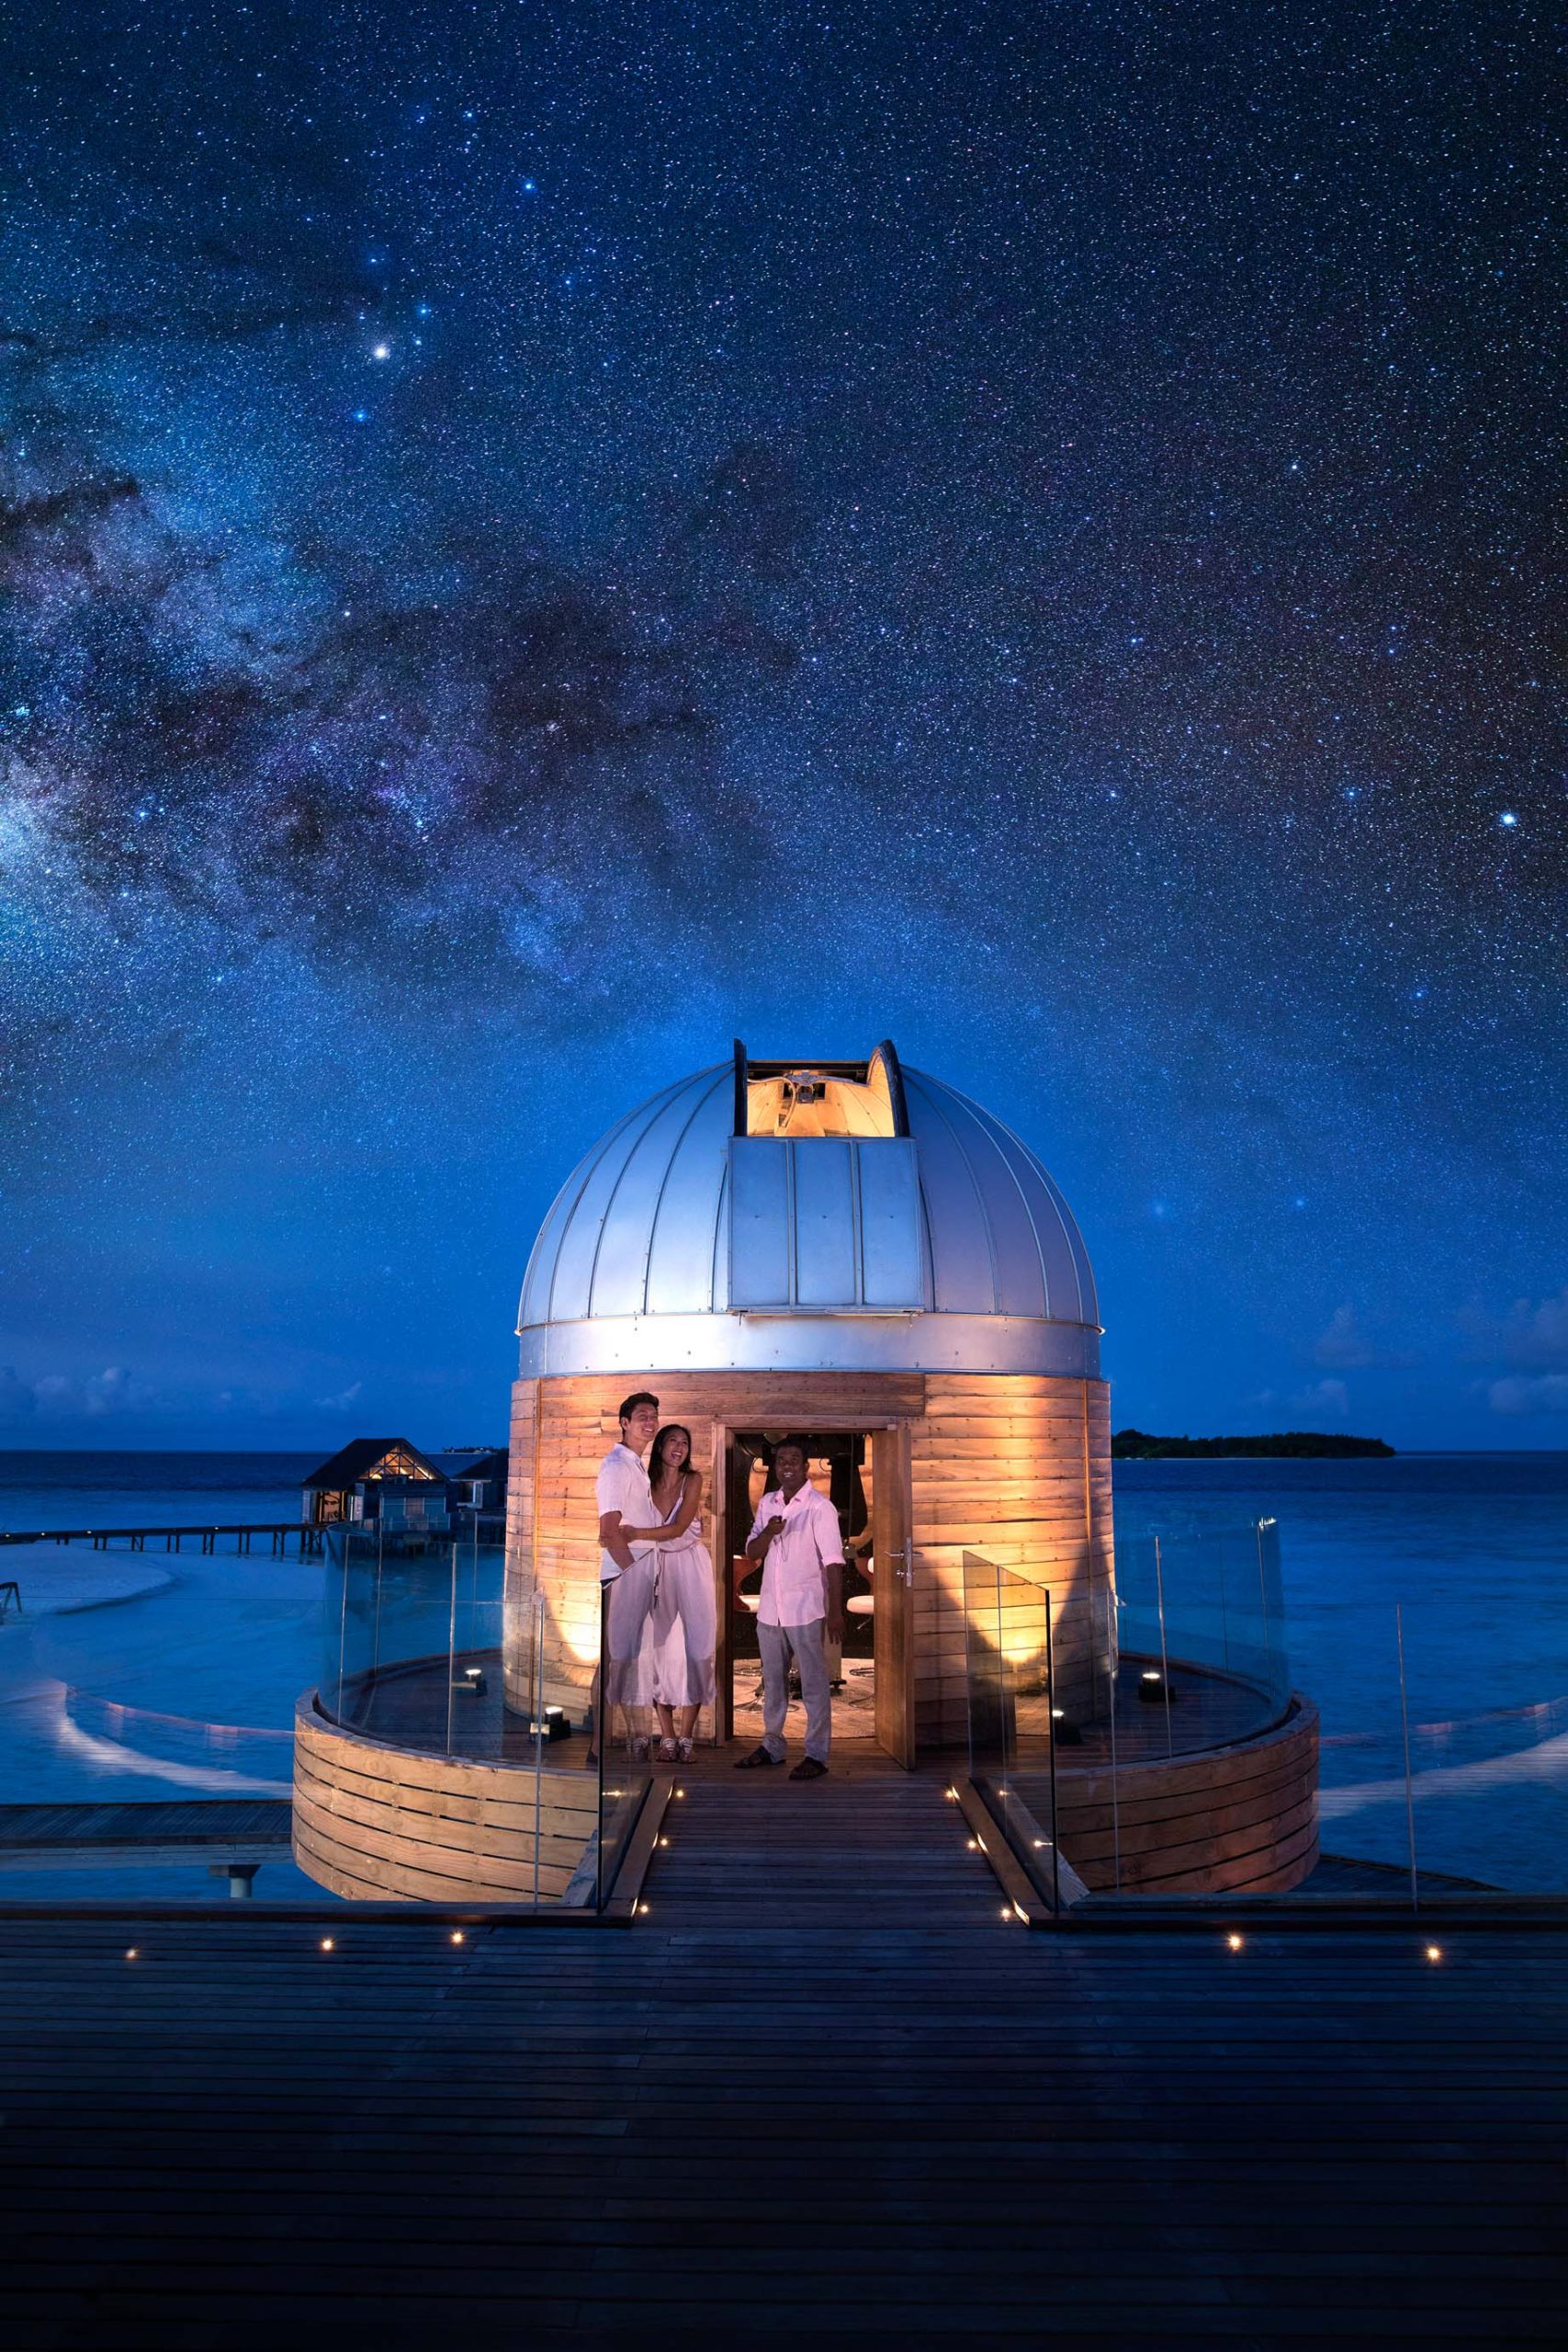 Anantara Kihavah Maldives Villas Resort – Baa Atoll, Maldives – Sky Observatory Stargazing